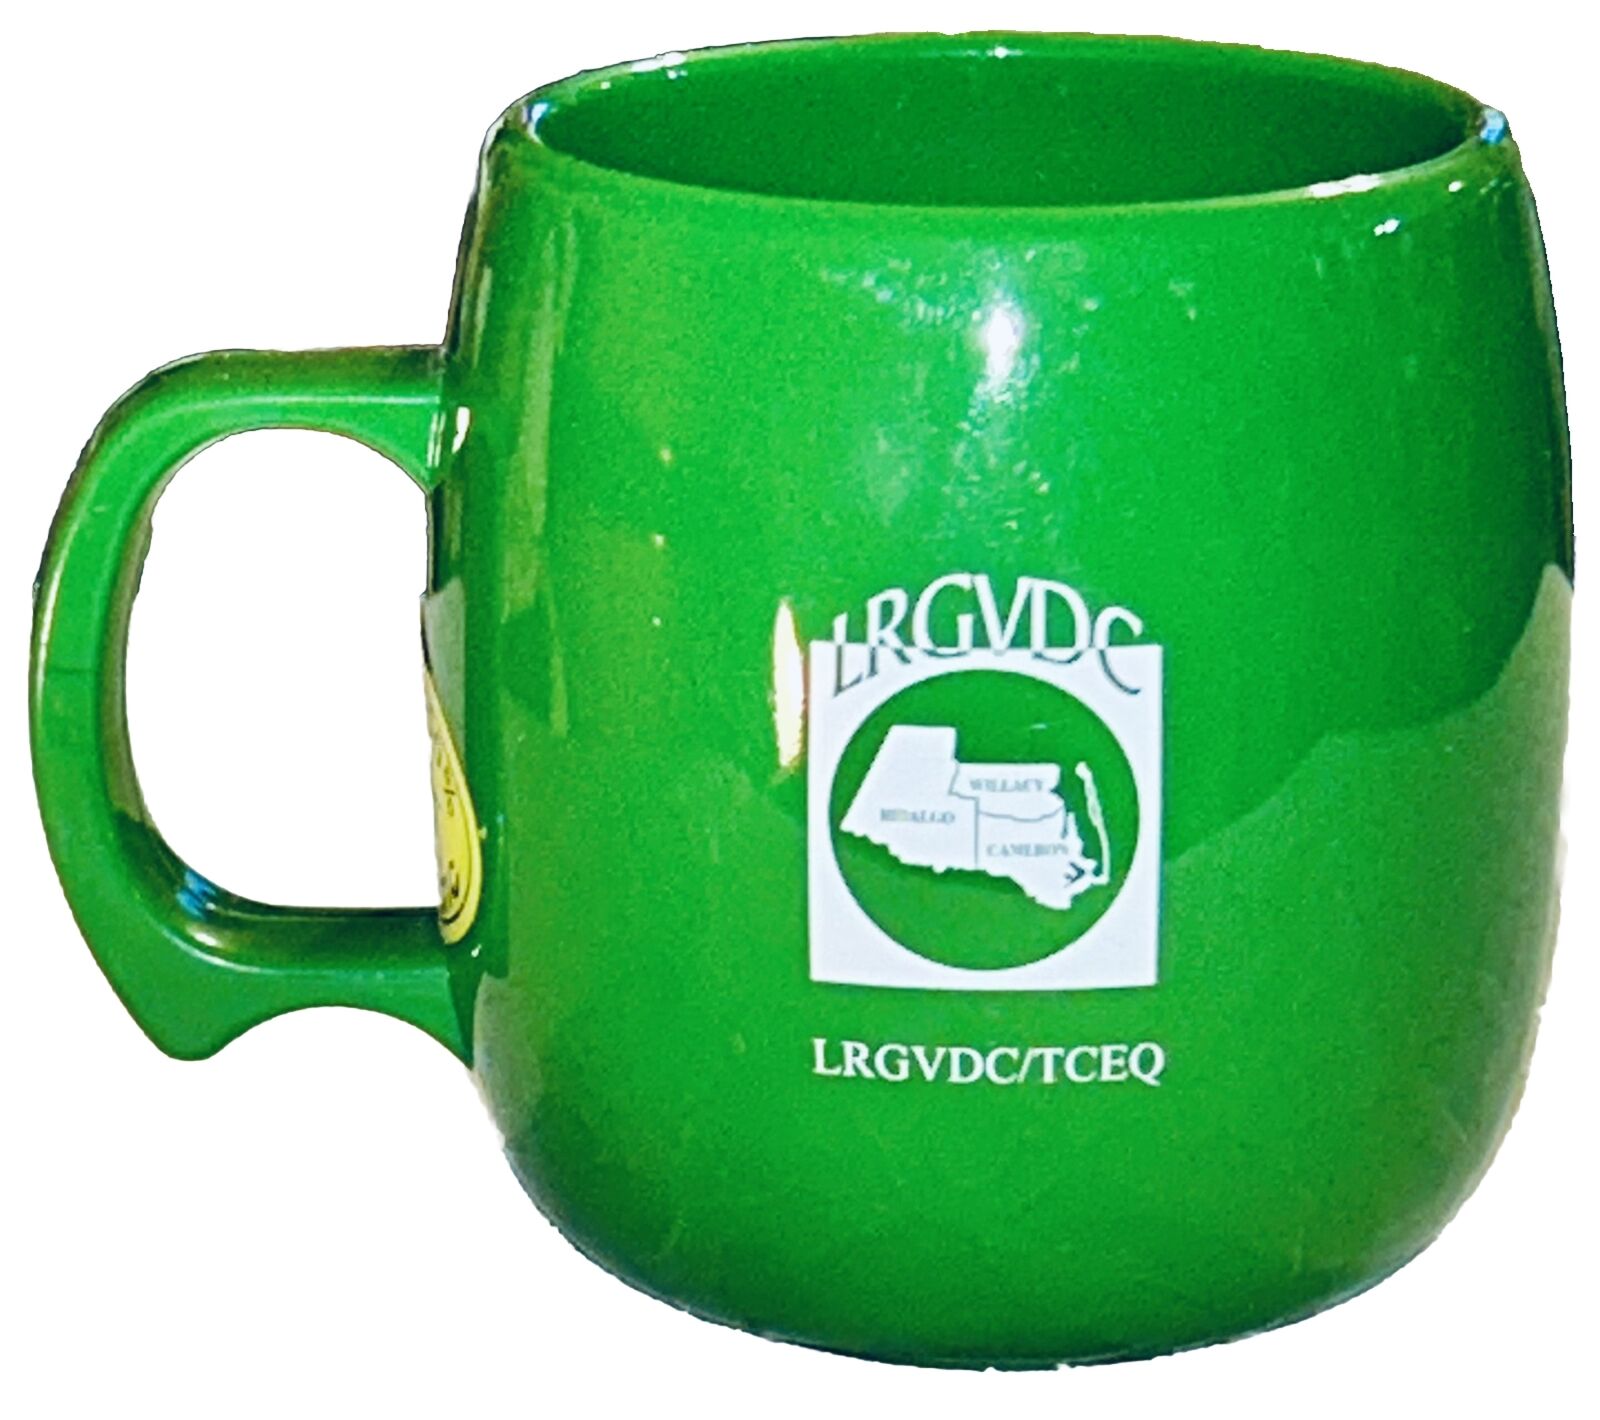 LRGVDC Love Earth Recycle Green Corn Plastic Koffee Keg Mug